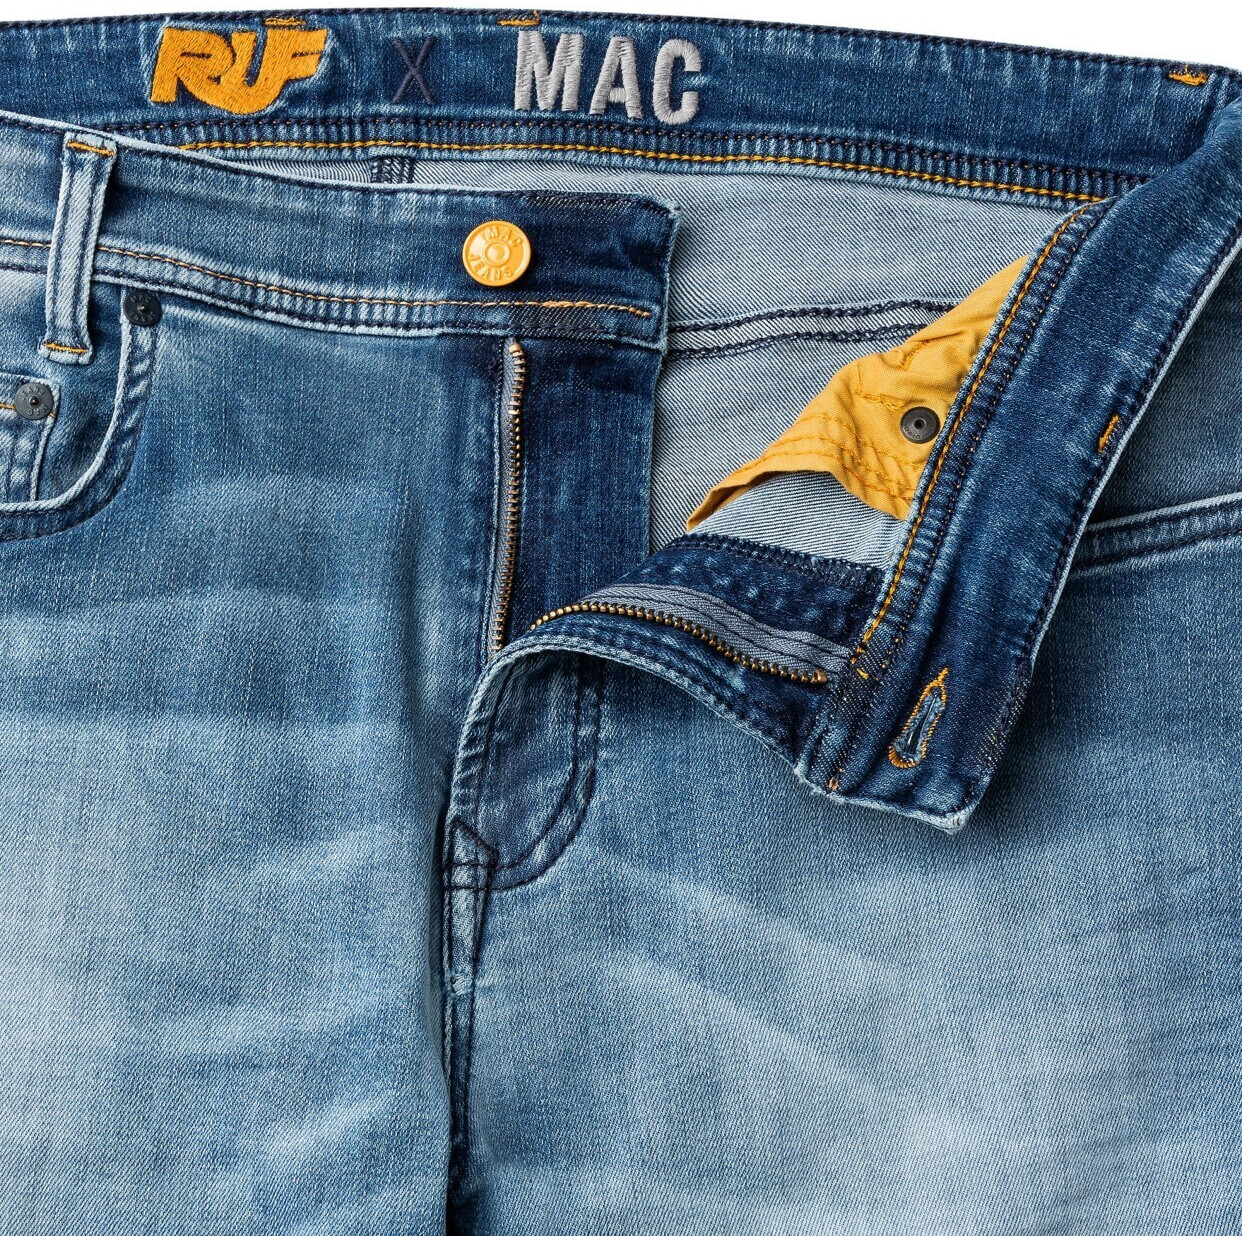 MAC Macflexx venice blue € | Preisvergleich 76,79 bei used ab